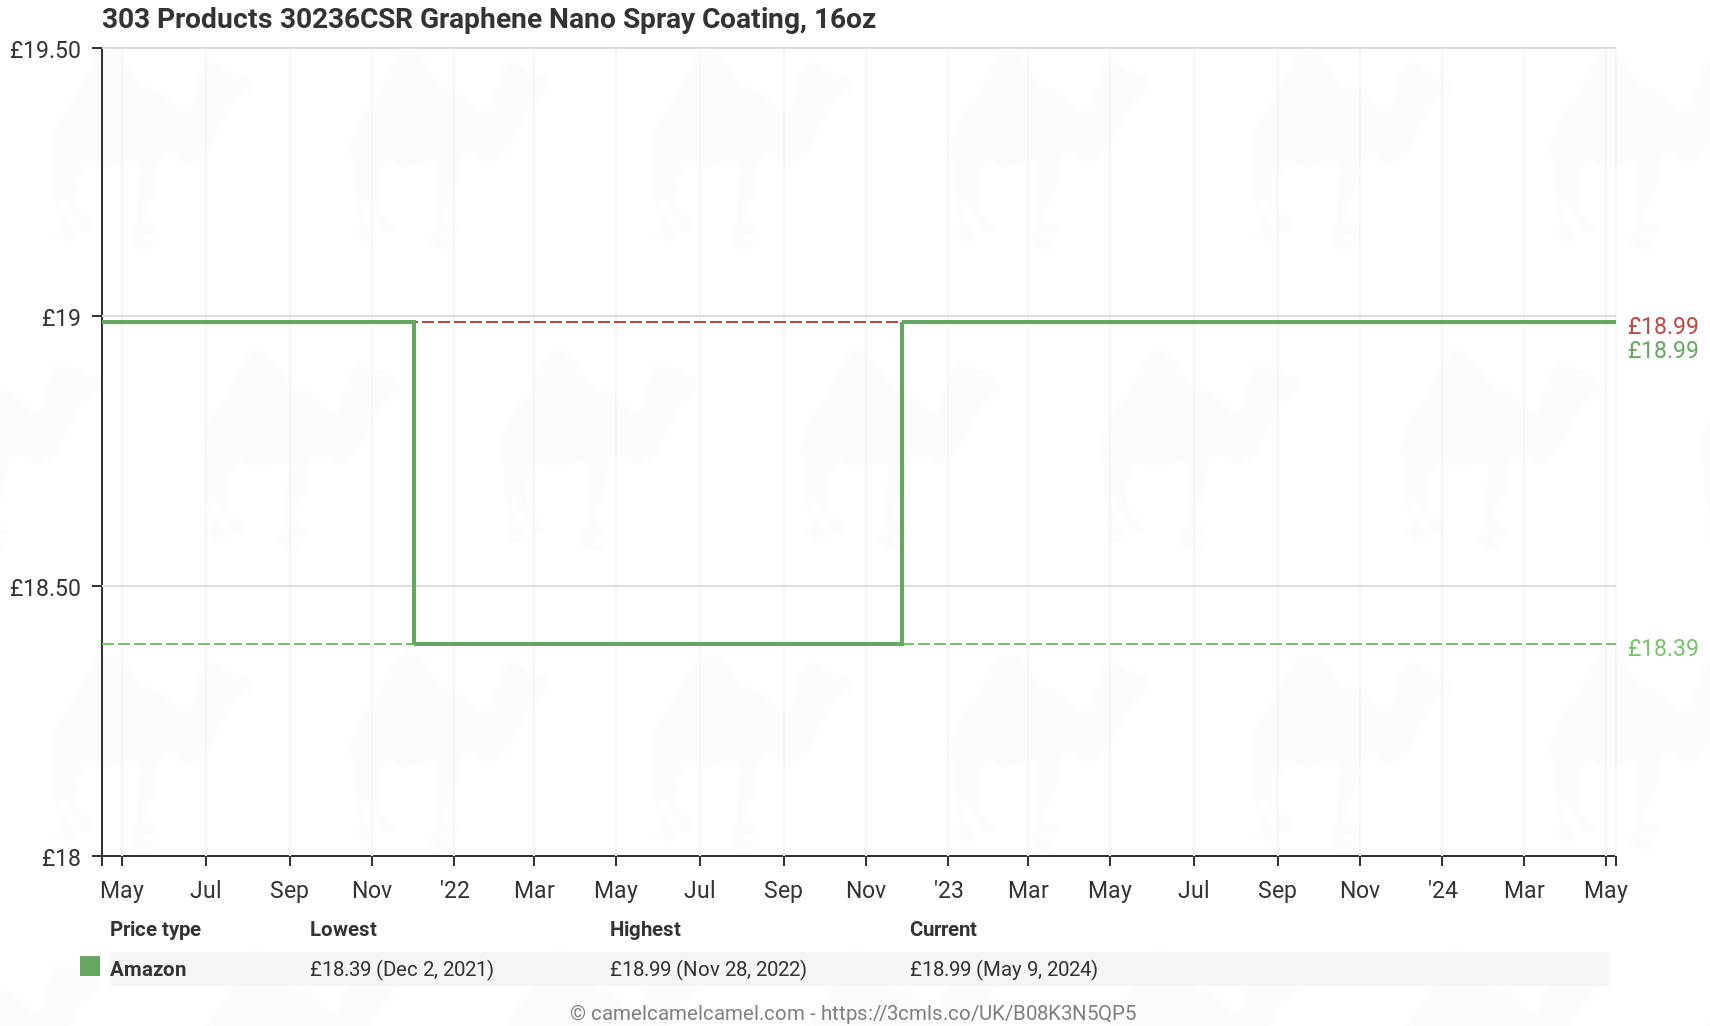 303 Products 30236CSR Graphene Nano Spray Coating, 16oz - Price History: B08K3N5QP5